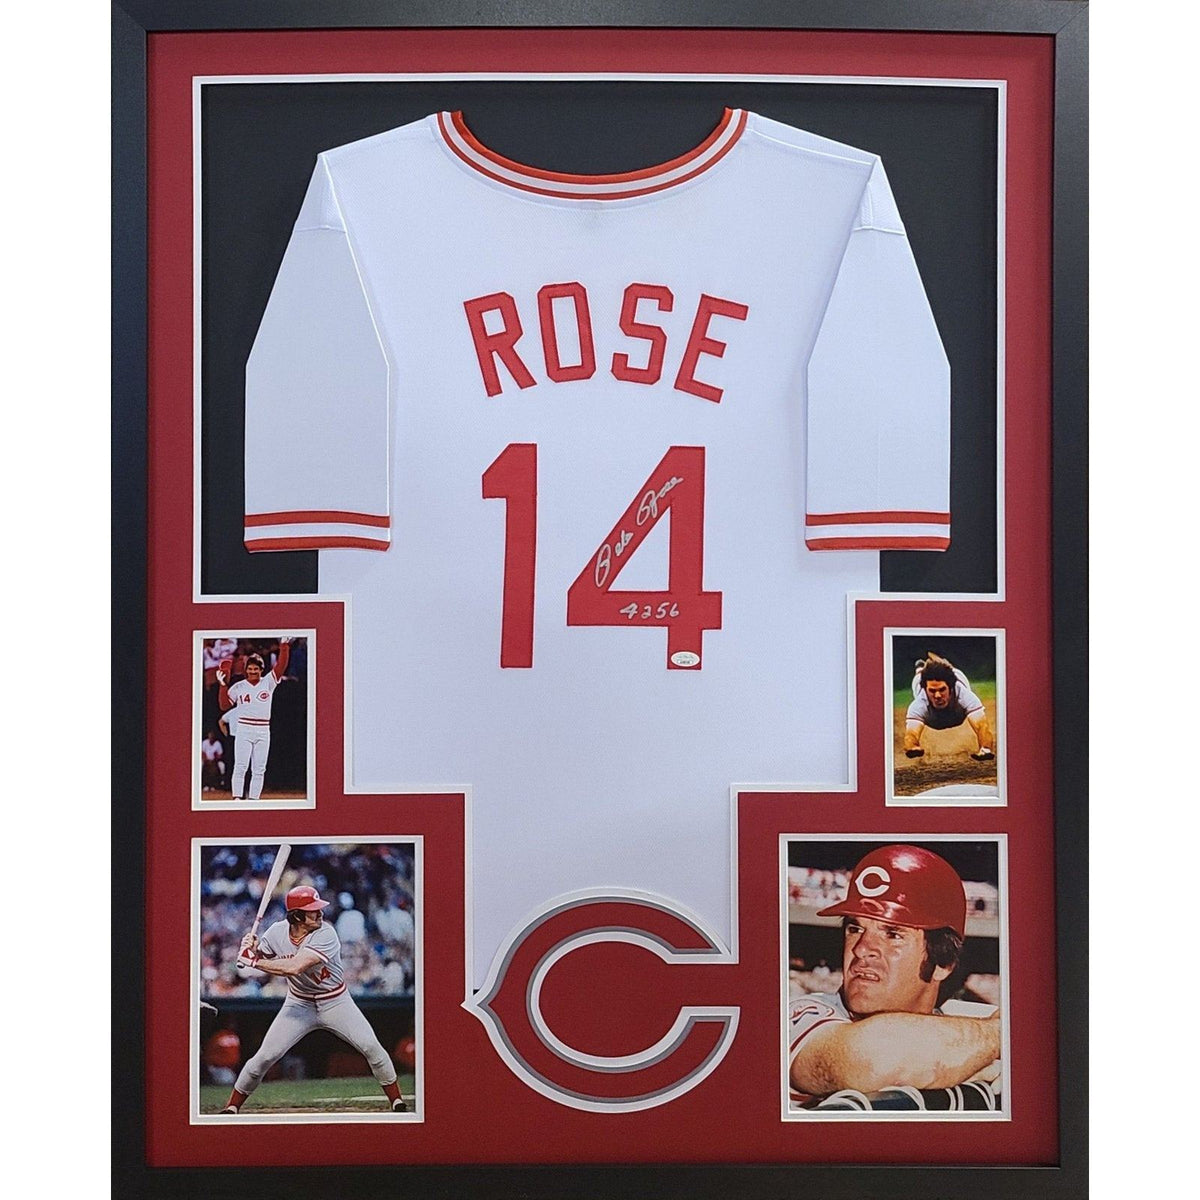 Pete Rose Framed Signed Grey Jersey JSA Autographed Cincinnati Reds